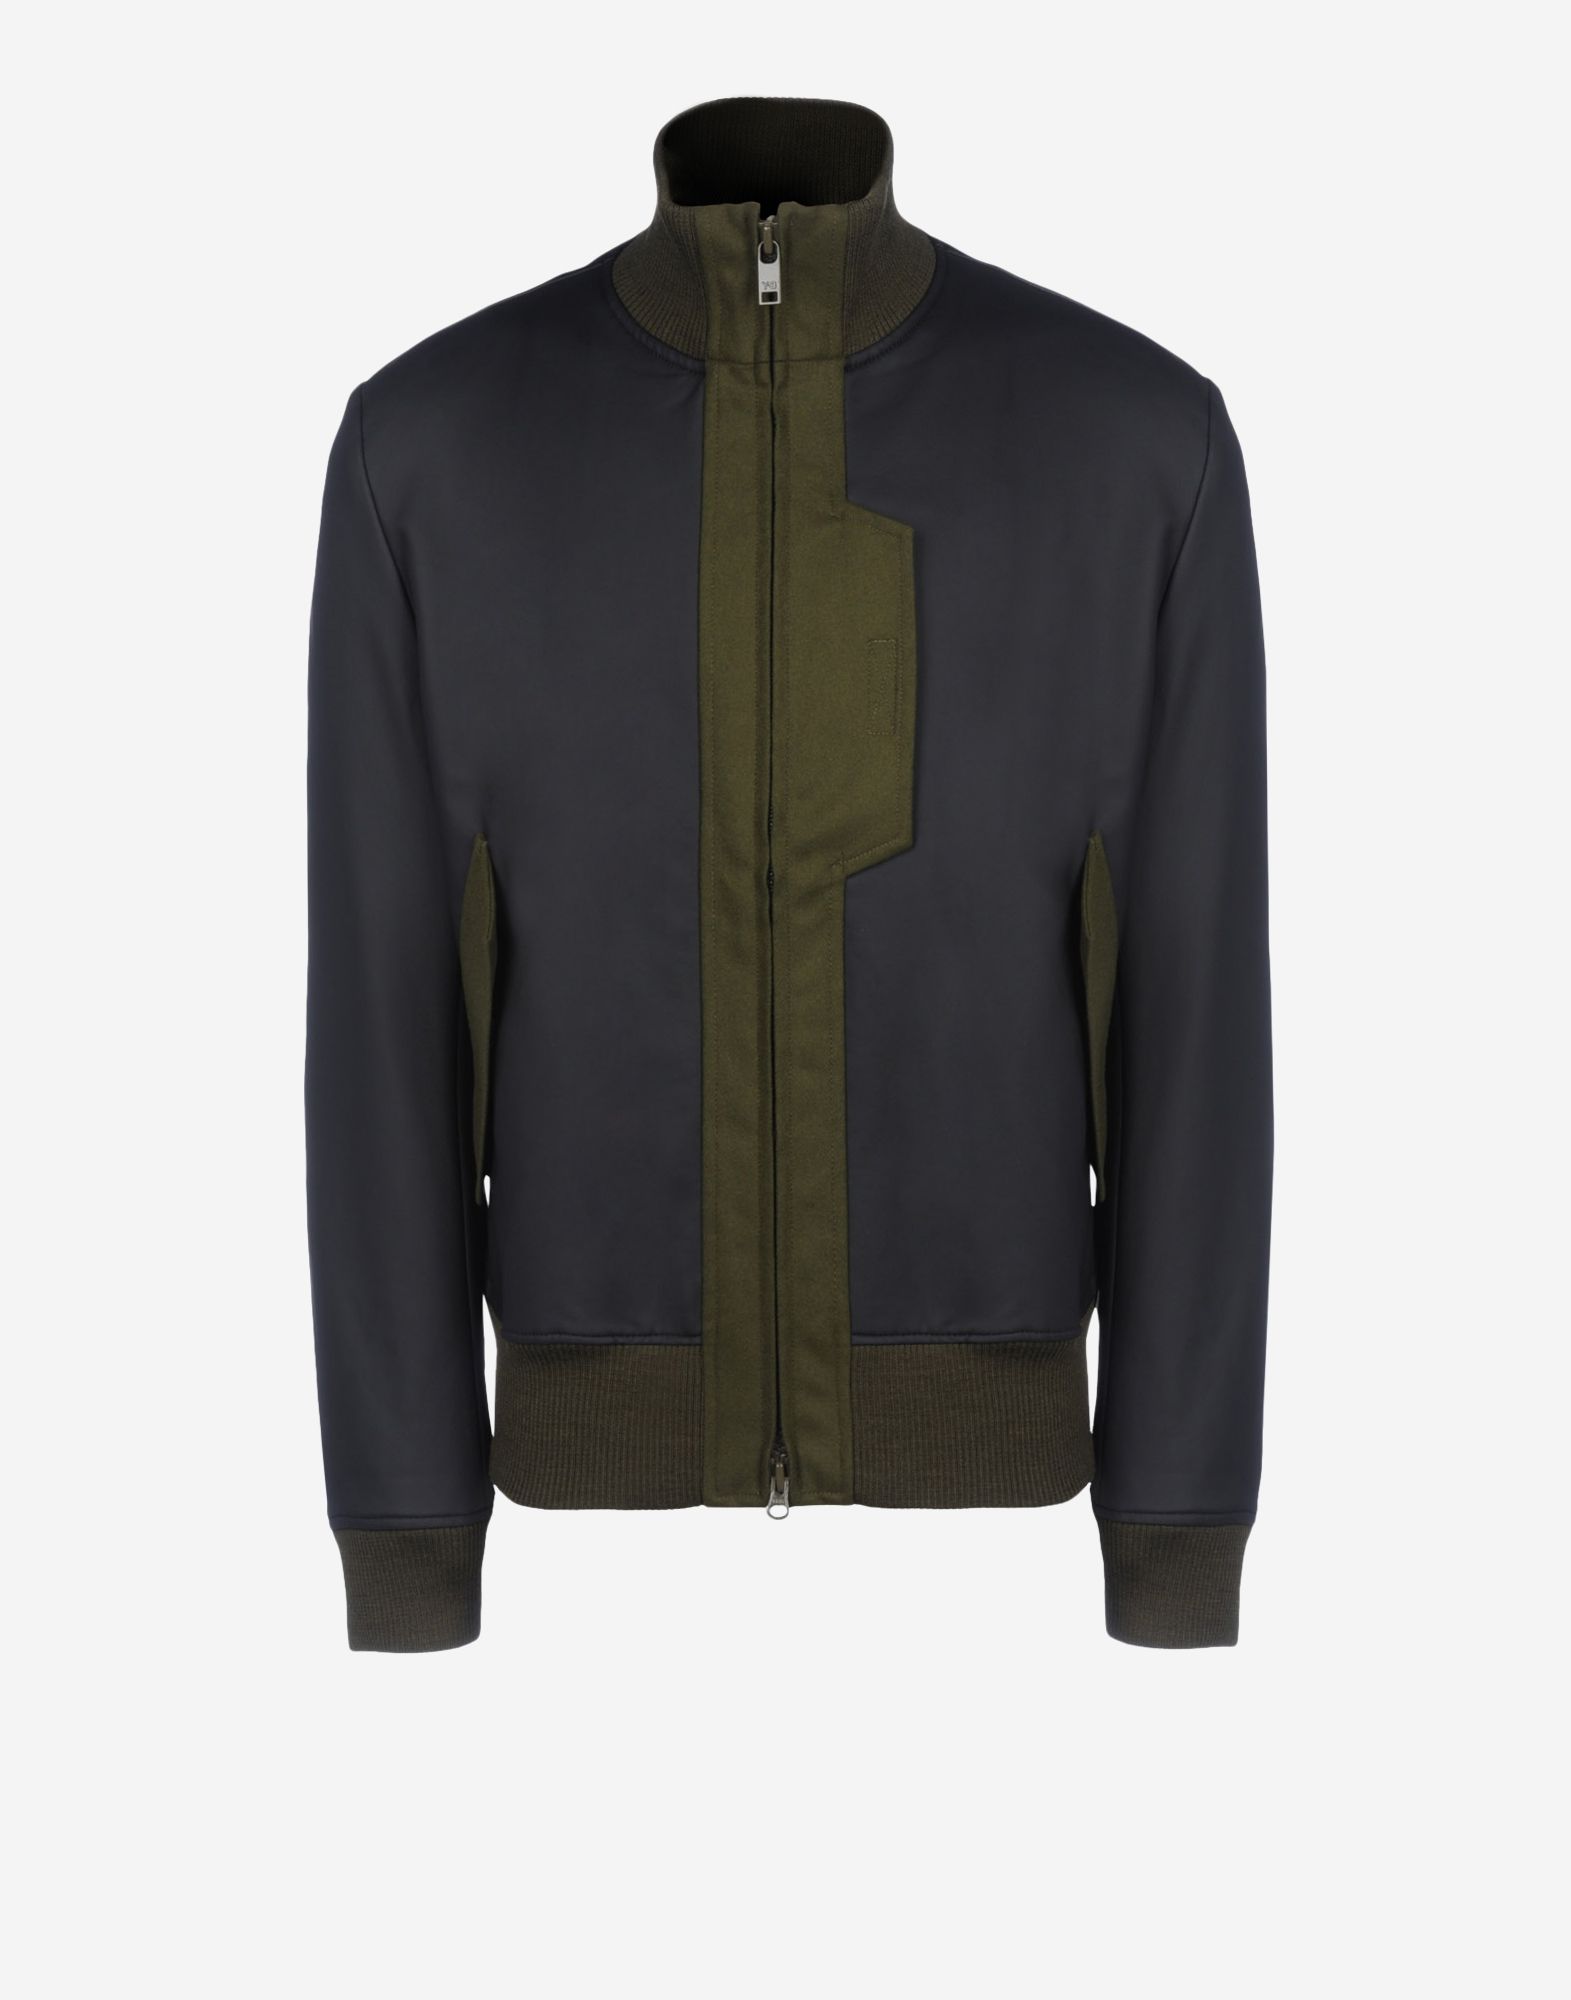 Y 3 Shadow Jacket for Men | Adidas Y-3 Official Store